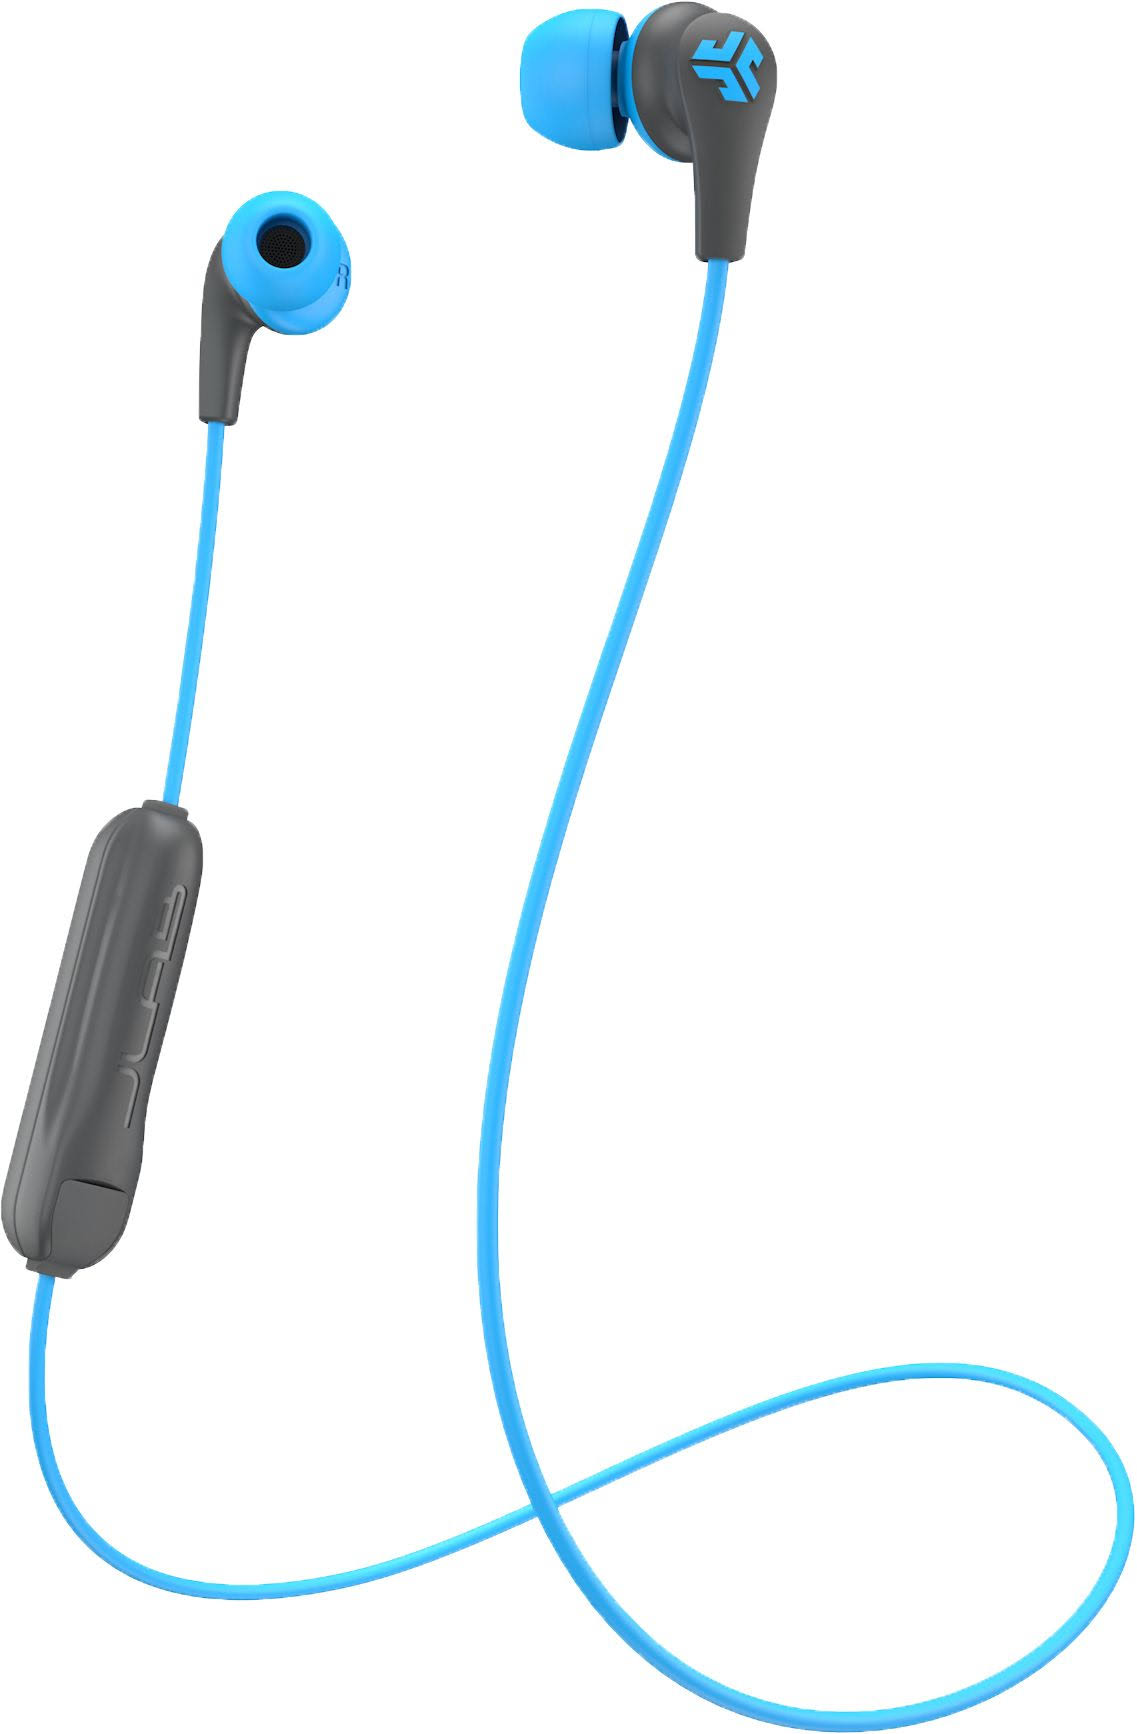 Jlab Audio Jbuds Pro Wireless Signature Earbuds - Blue/Gray